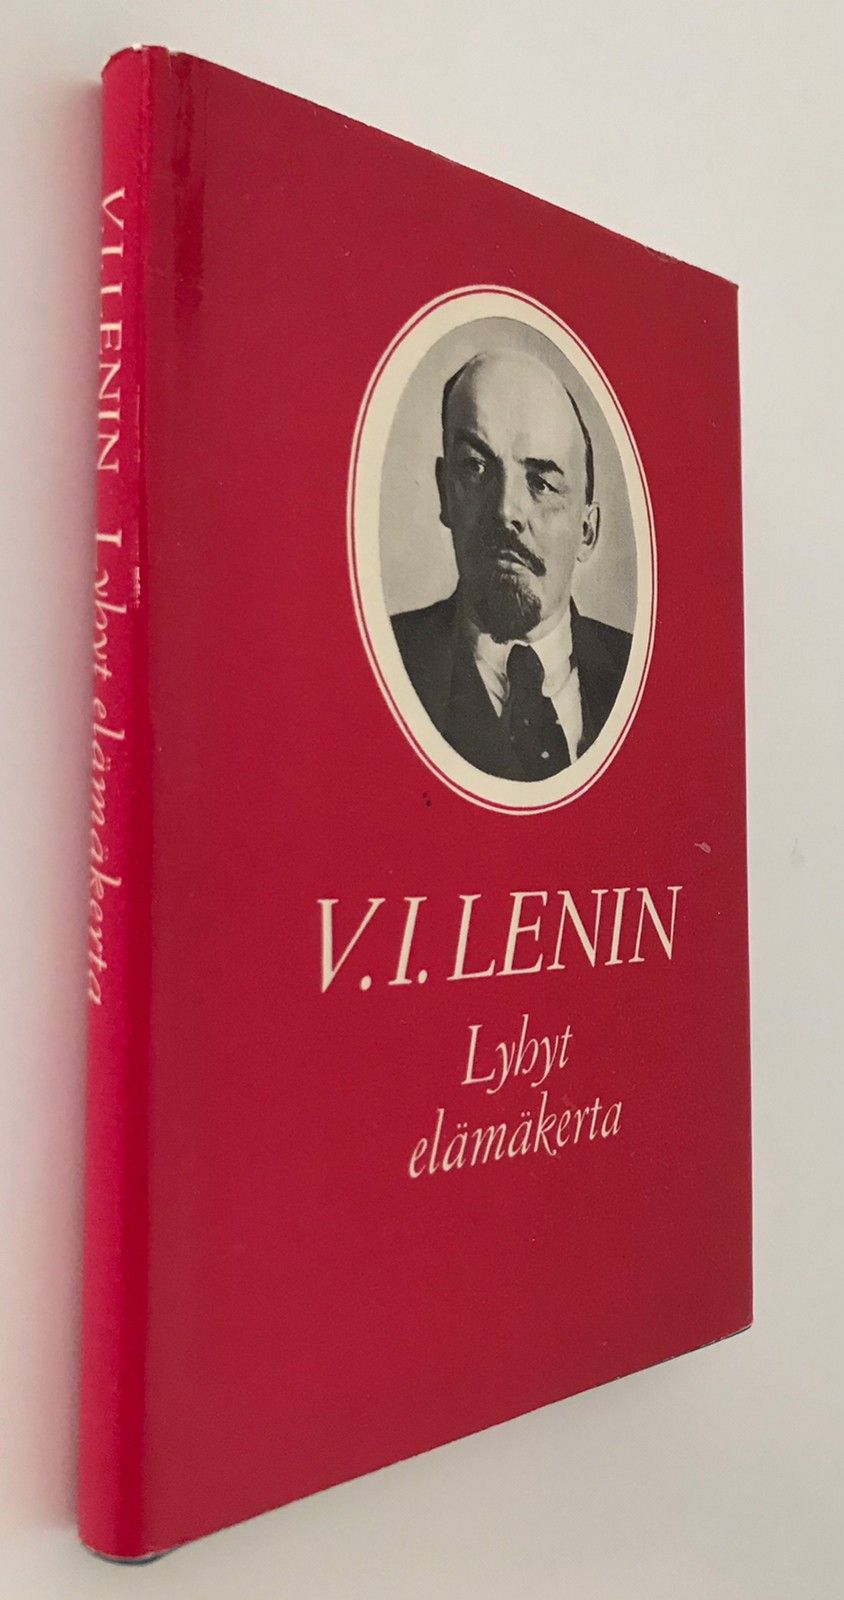 Lenin Lyhyt elämäkerta